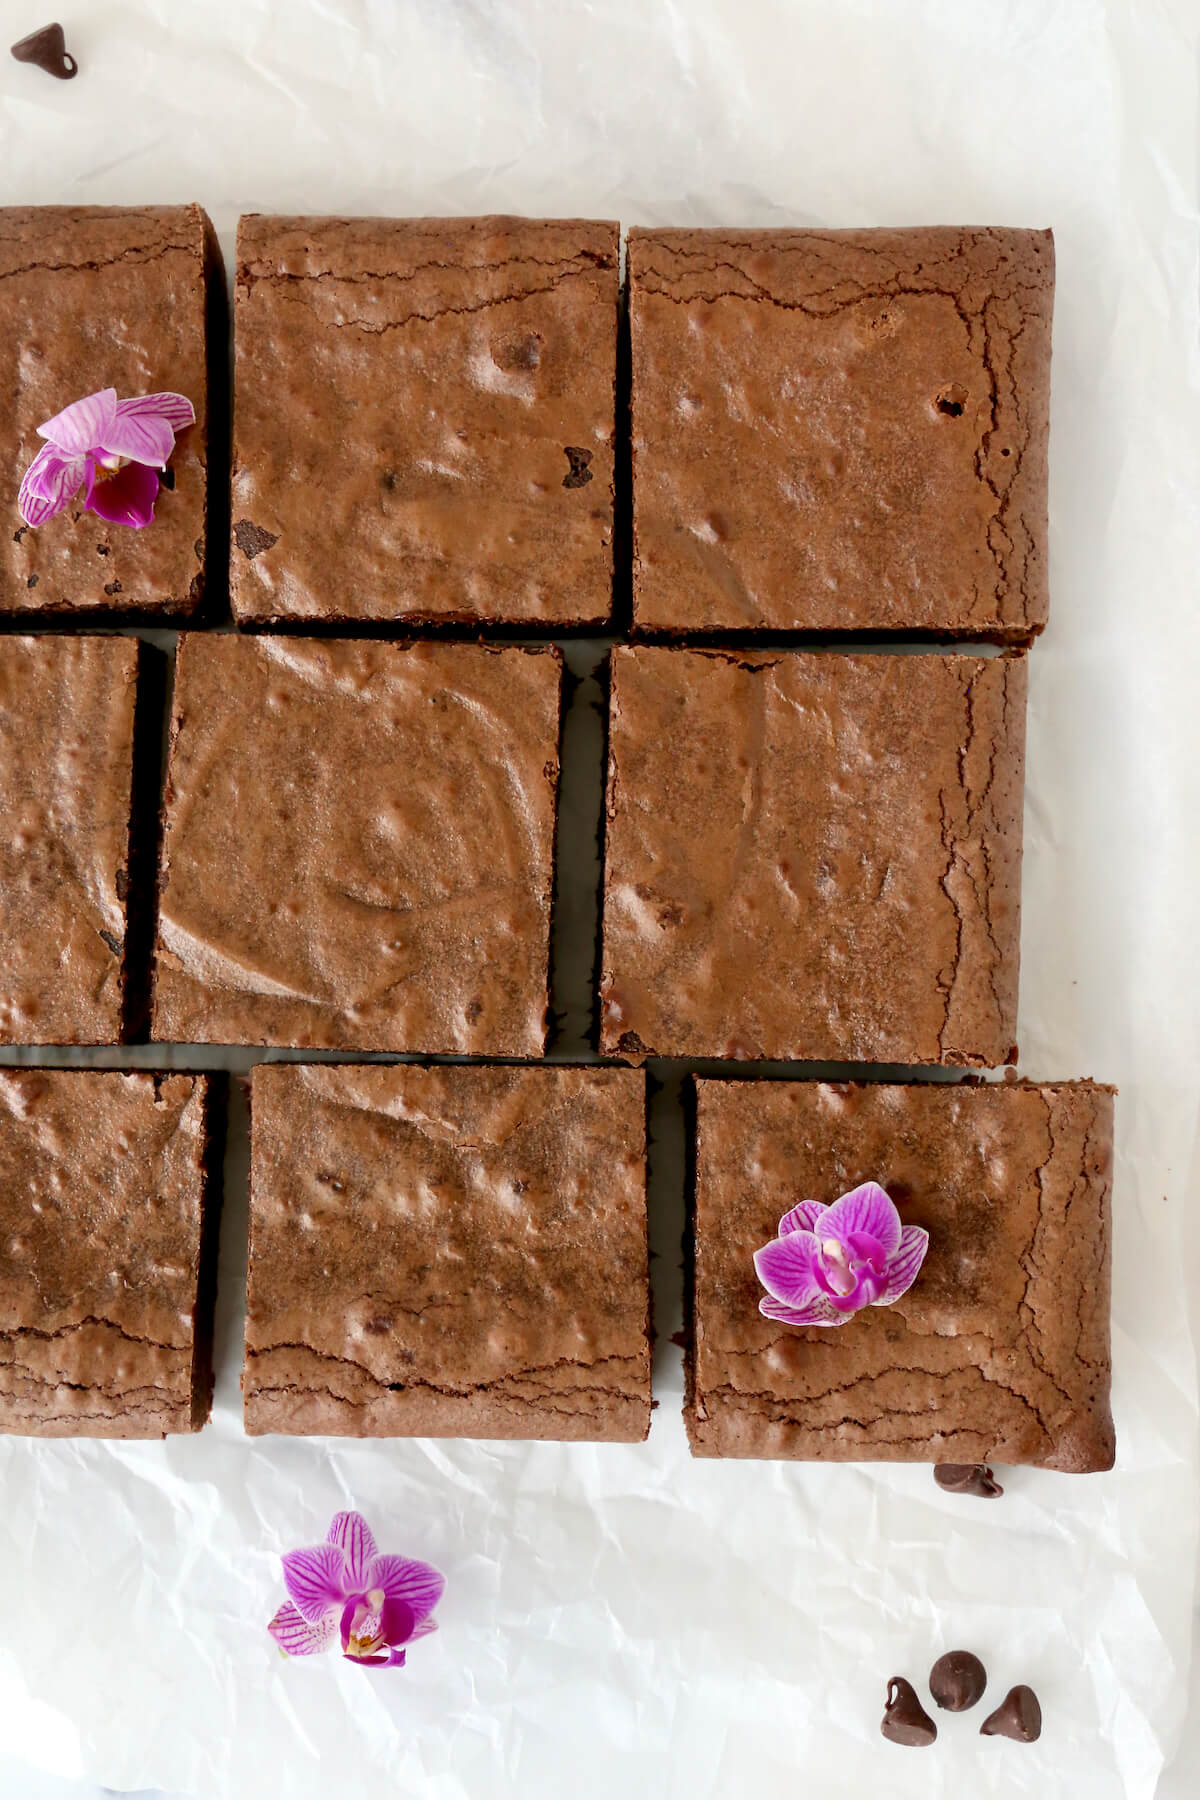 Nine chocolate brownie squares with purple flowers.  